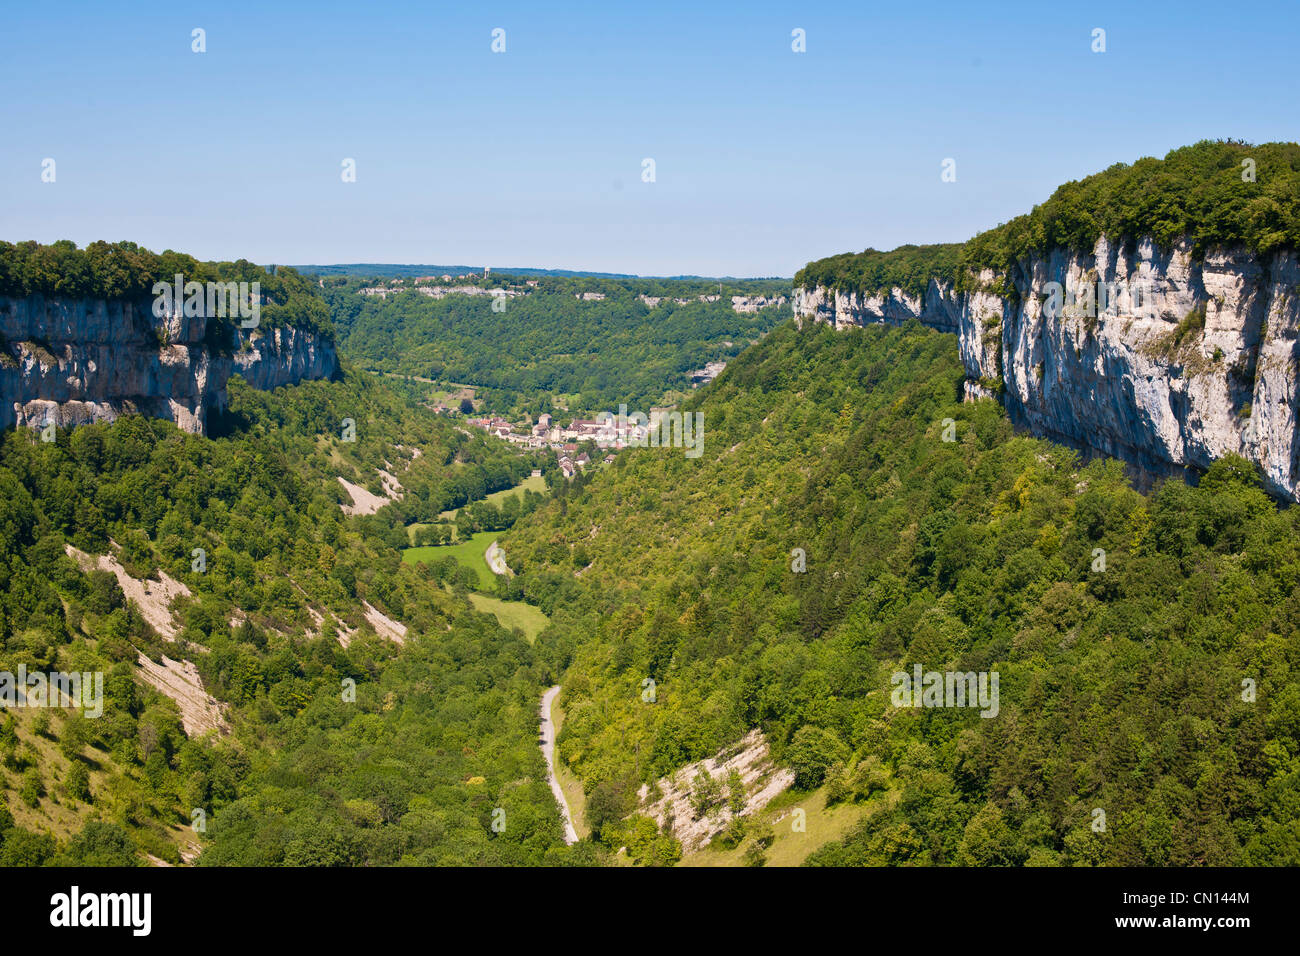 France, Jura, Baume les Messieurs, labeled Les Plus Beaux Villages de France (The Most Beautiful Villages of France), dominated Stock Photo